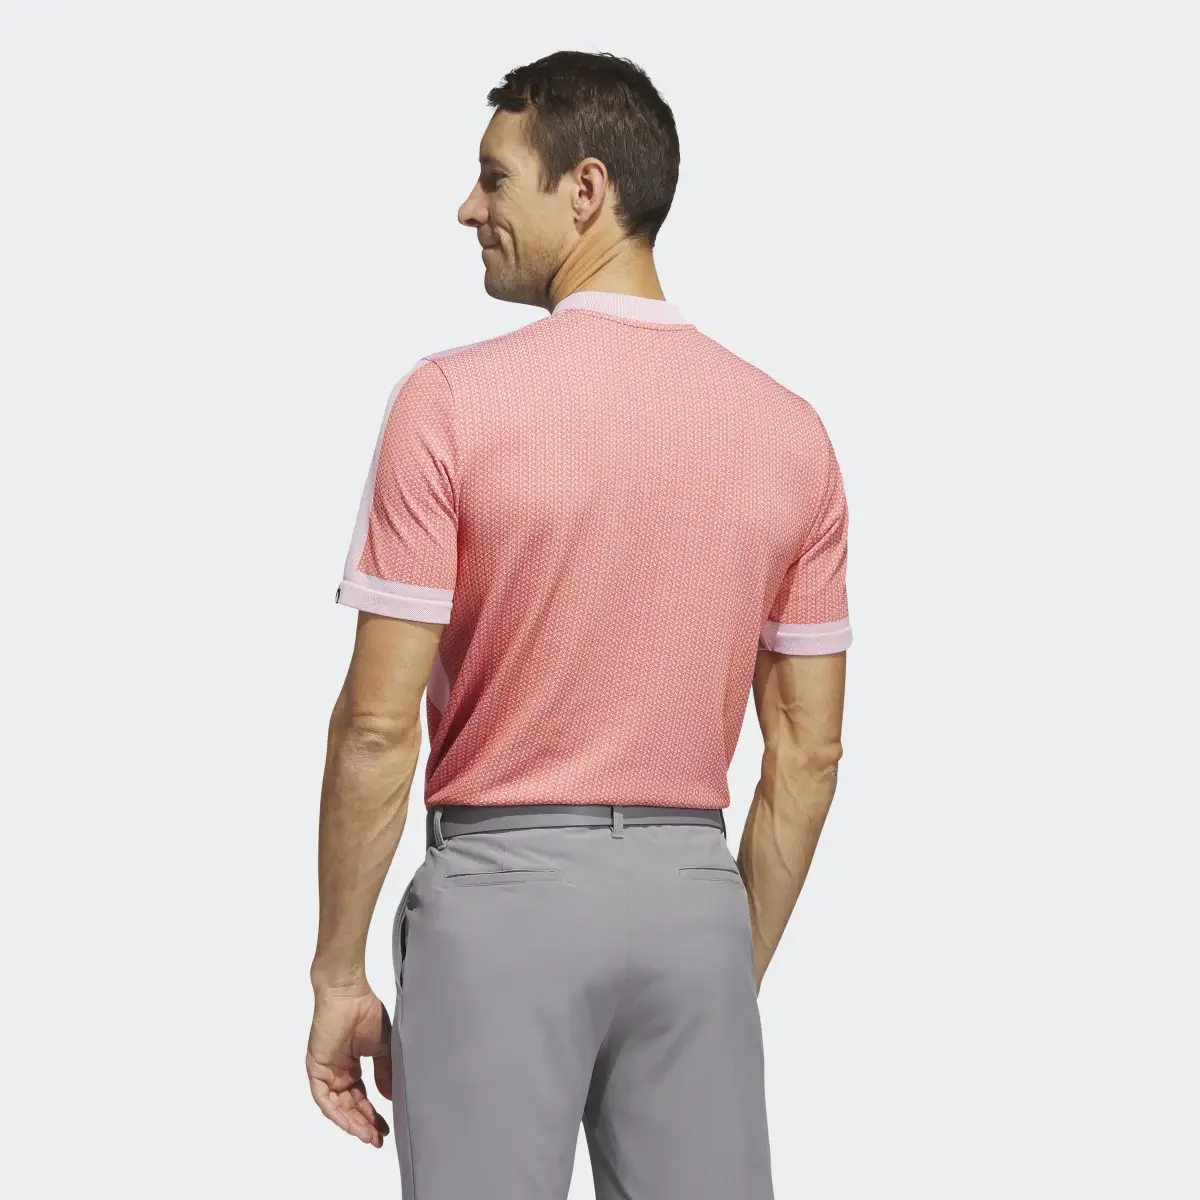 Adidas Ultimate365 Tour Textured PRIMEKNIT Golf Polo Shirt. 3